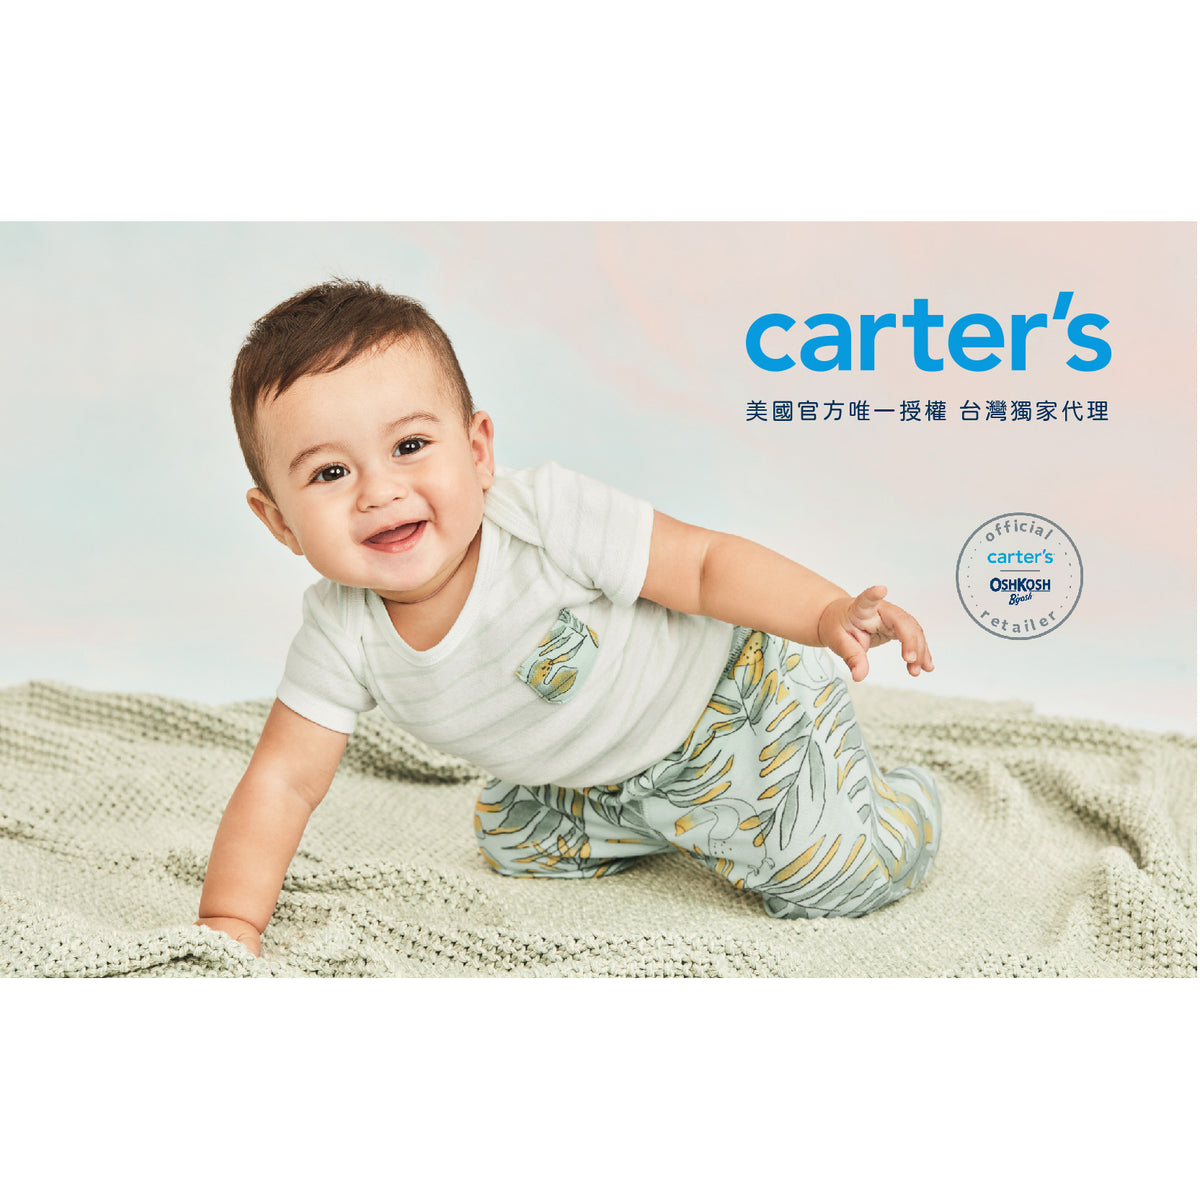 Carter's 小小塗鴉連身褲(6M-24M)